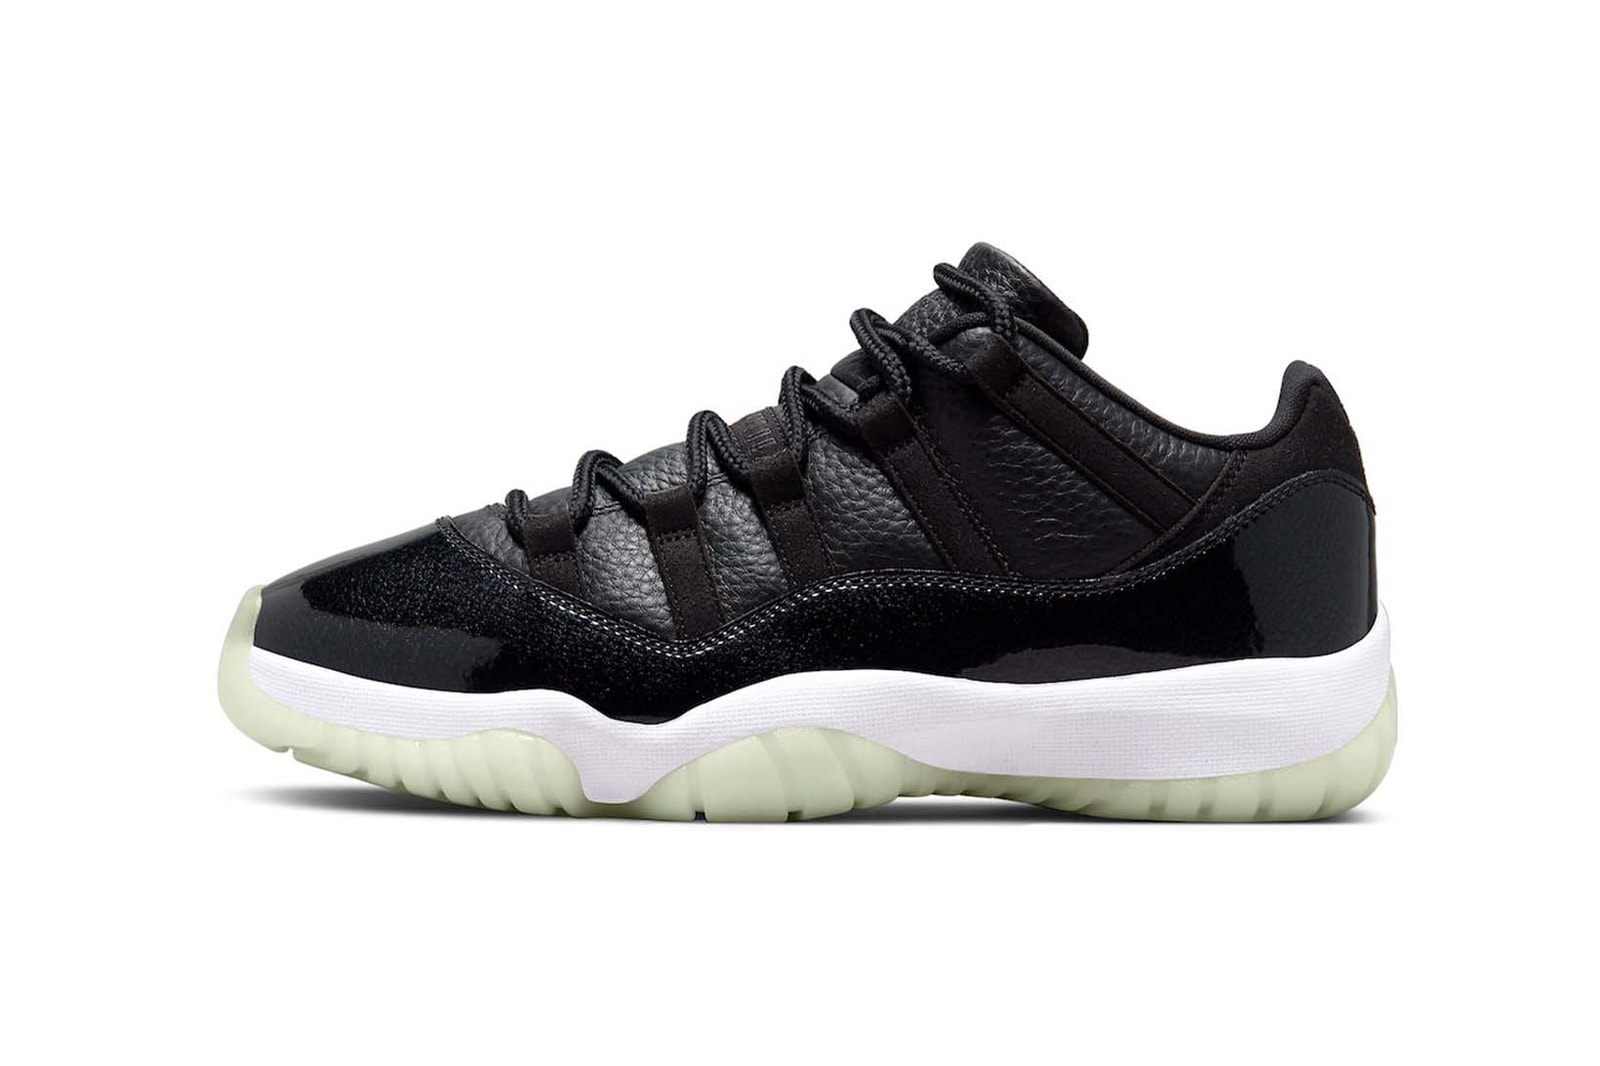 Sneaker Release Roundup Calendar Nike Air Jordan Reebok Stussy Billionaire Boys Club Yeezy adidas